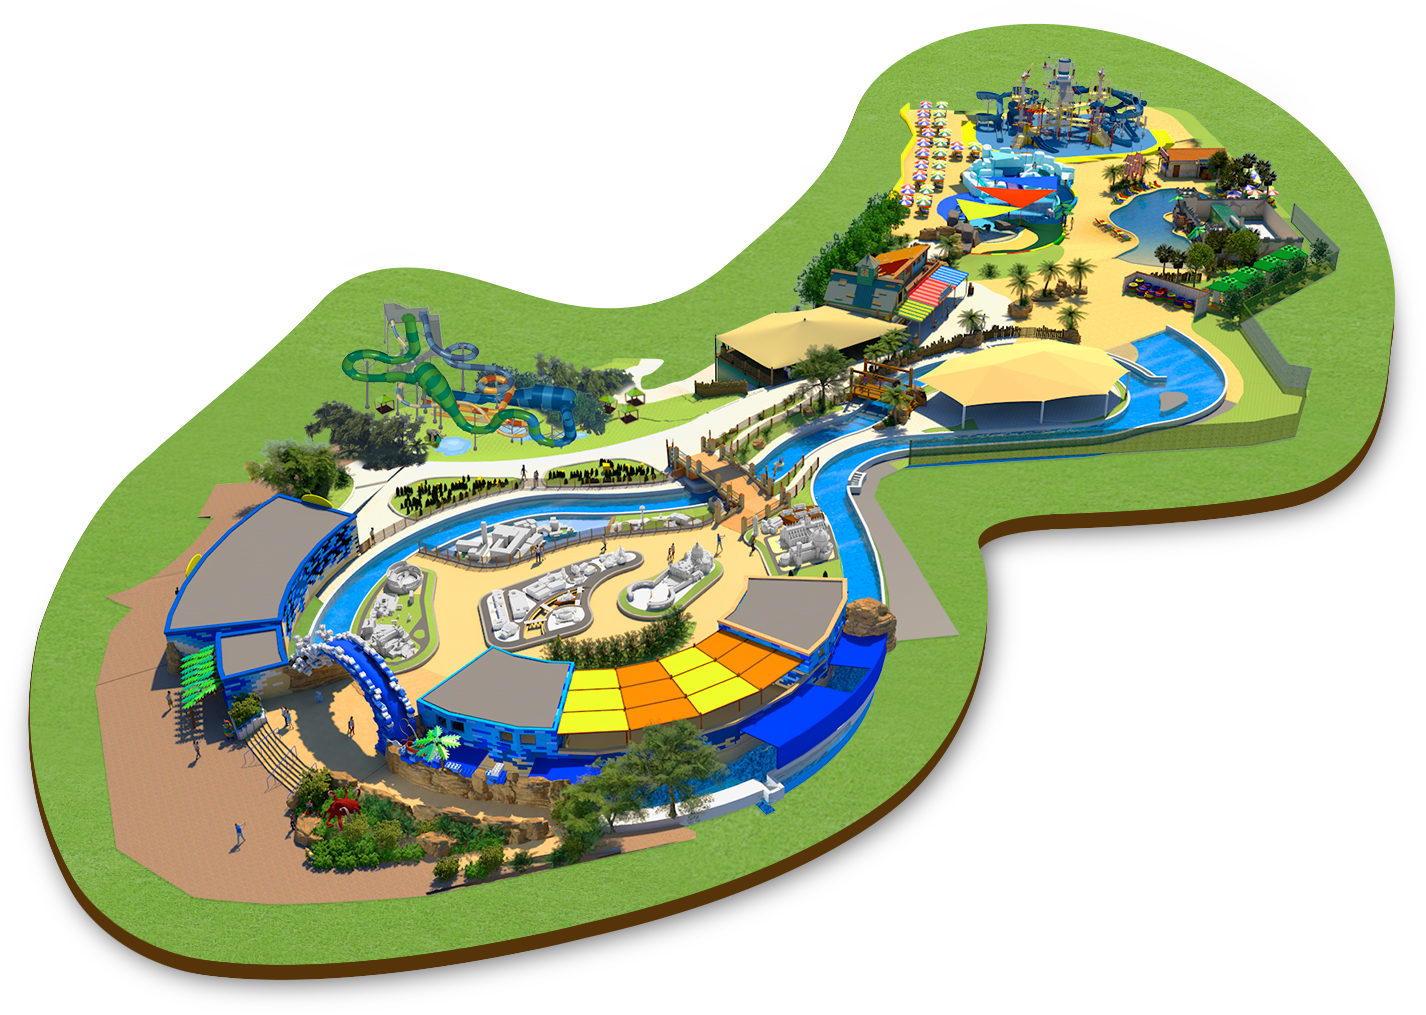 Legoland Water Park Gardaland